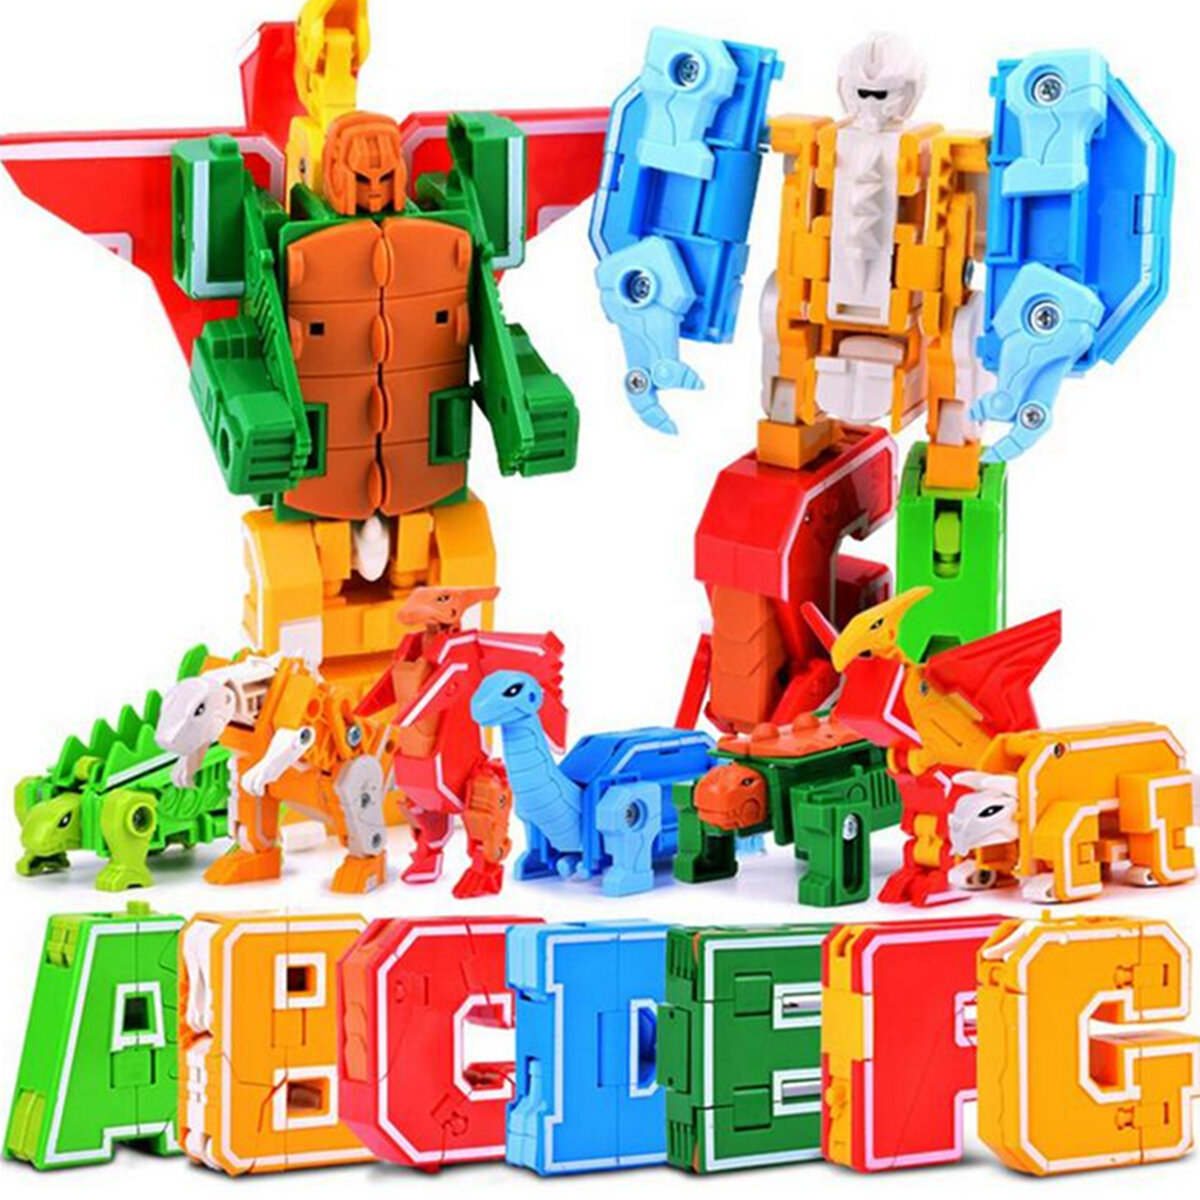 

DIY Puzzle Educational Toys English Letter Transformation Alphabet Dinosaur Robot Animal Kids Toy Gift For Children